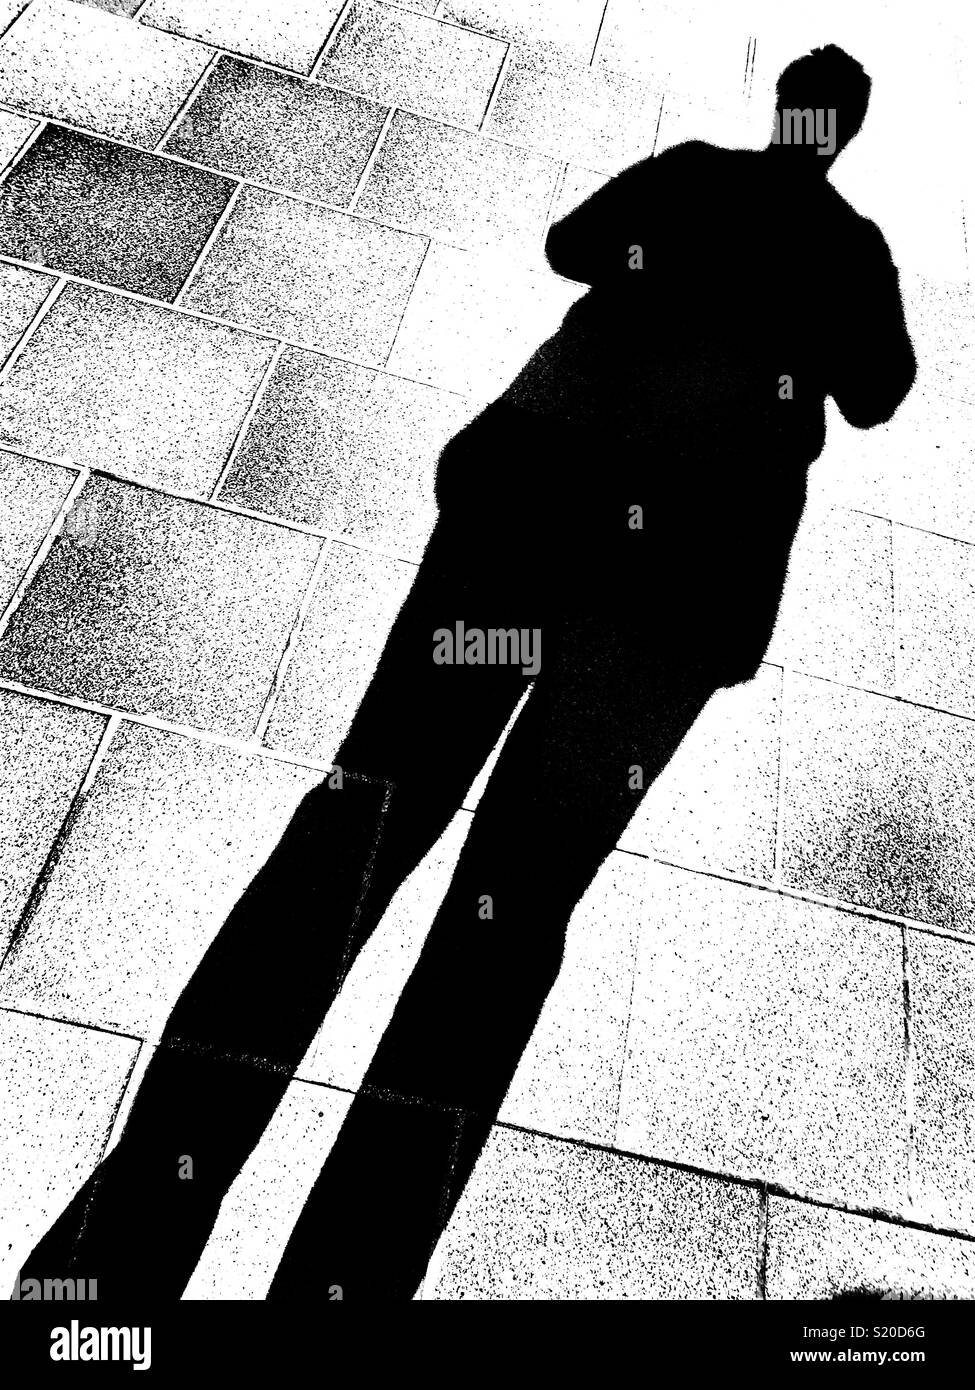 Human shadow on a tiled floor, monochrome Stock Photo